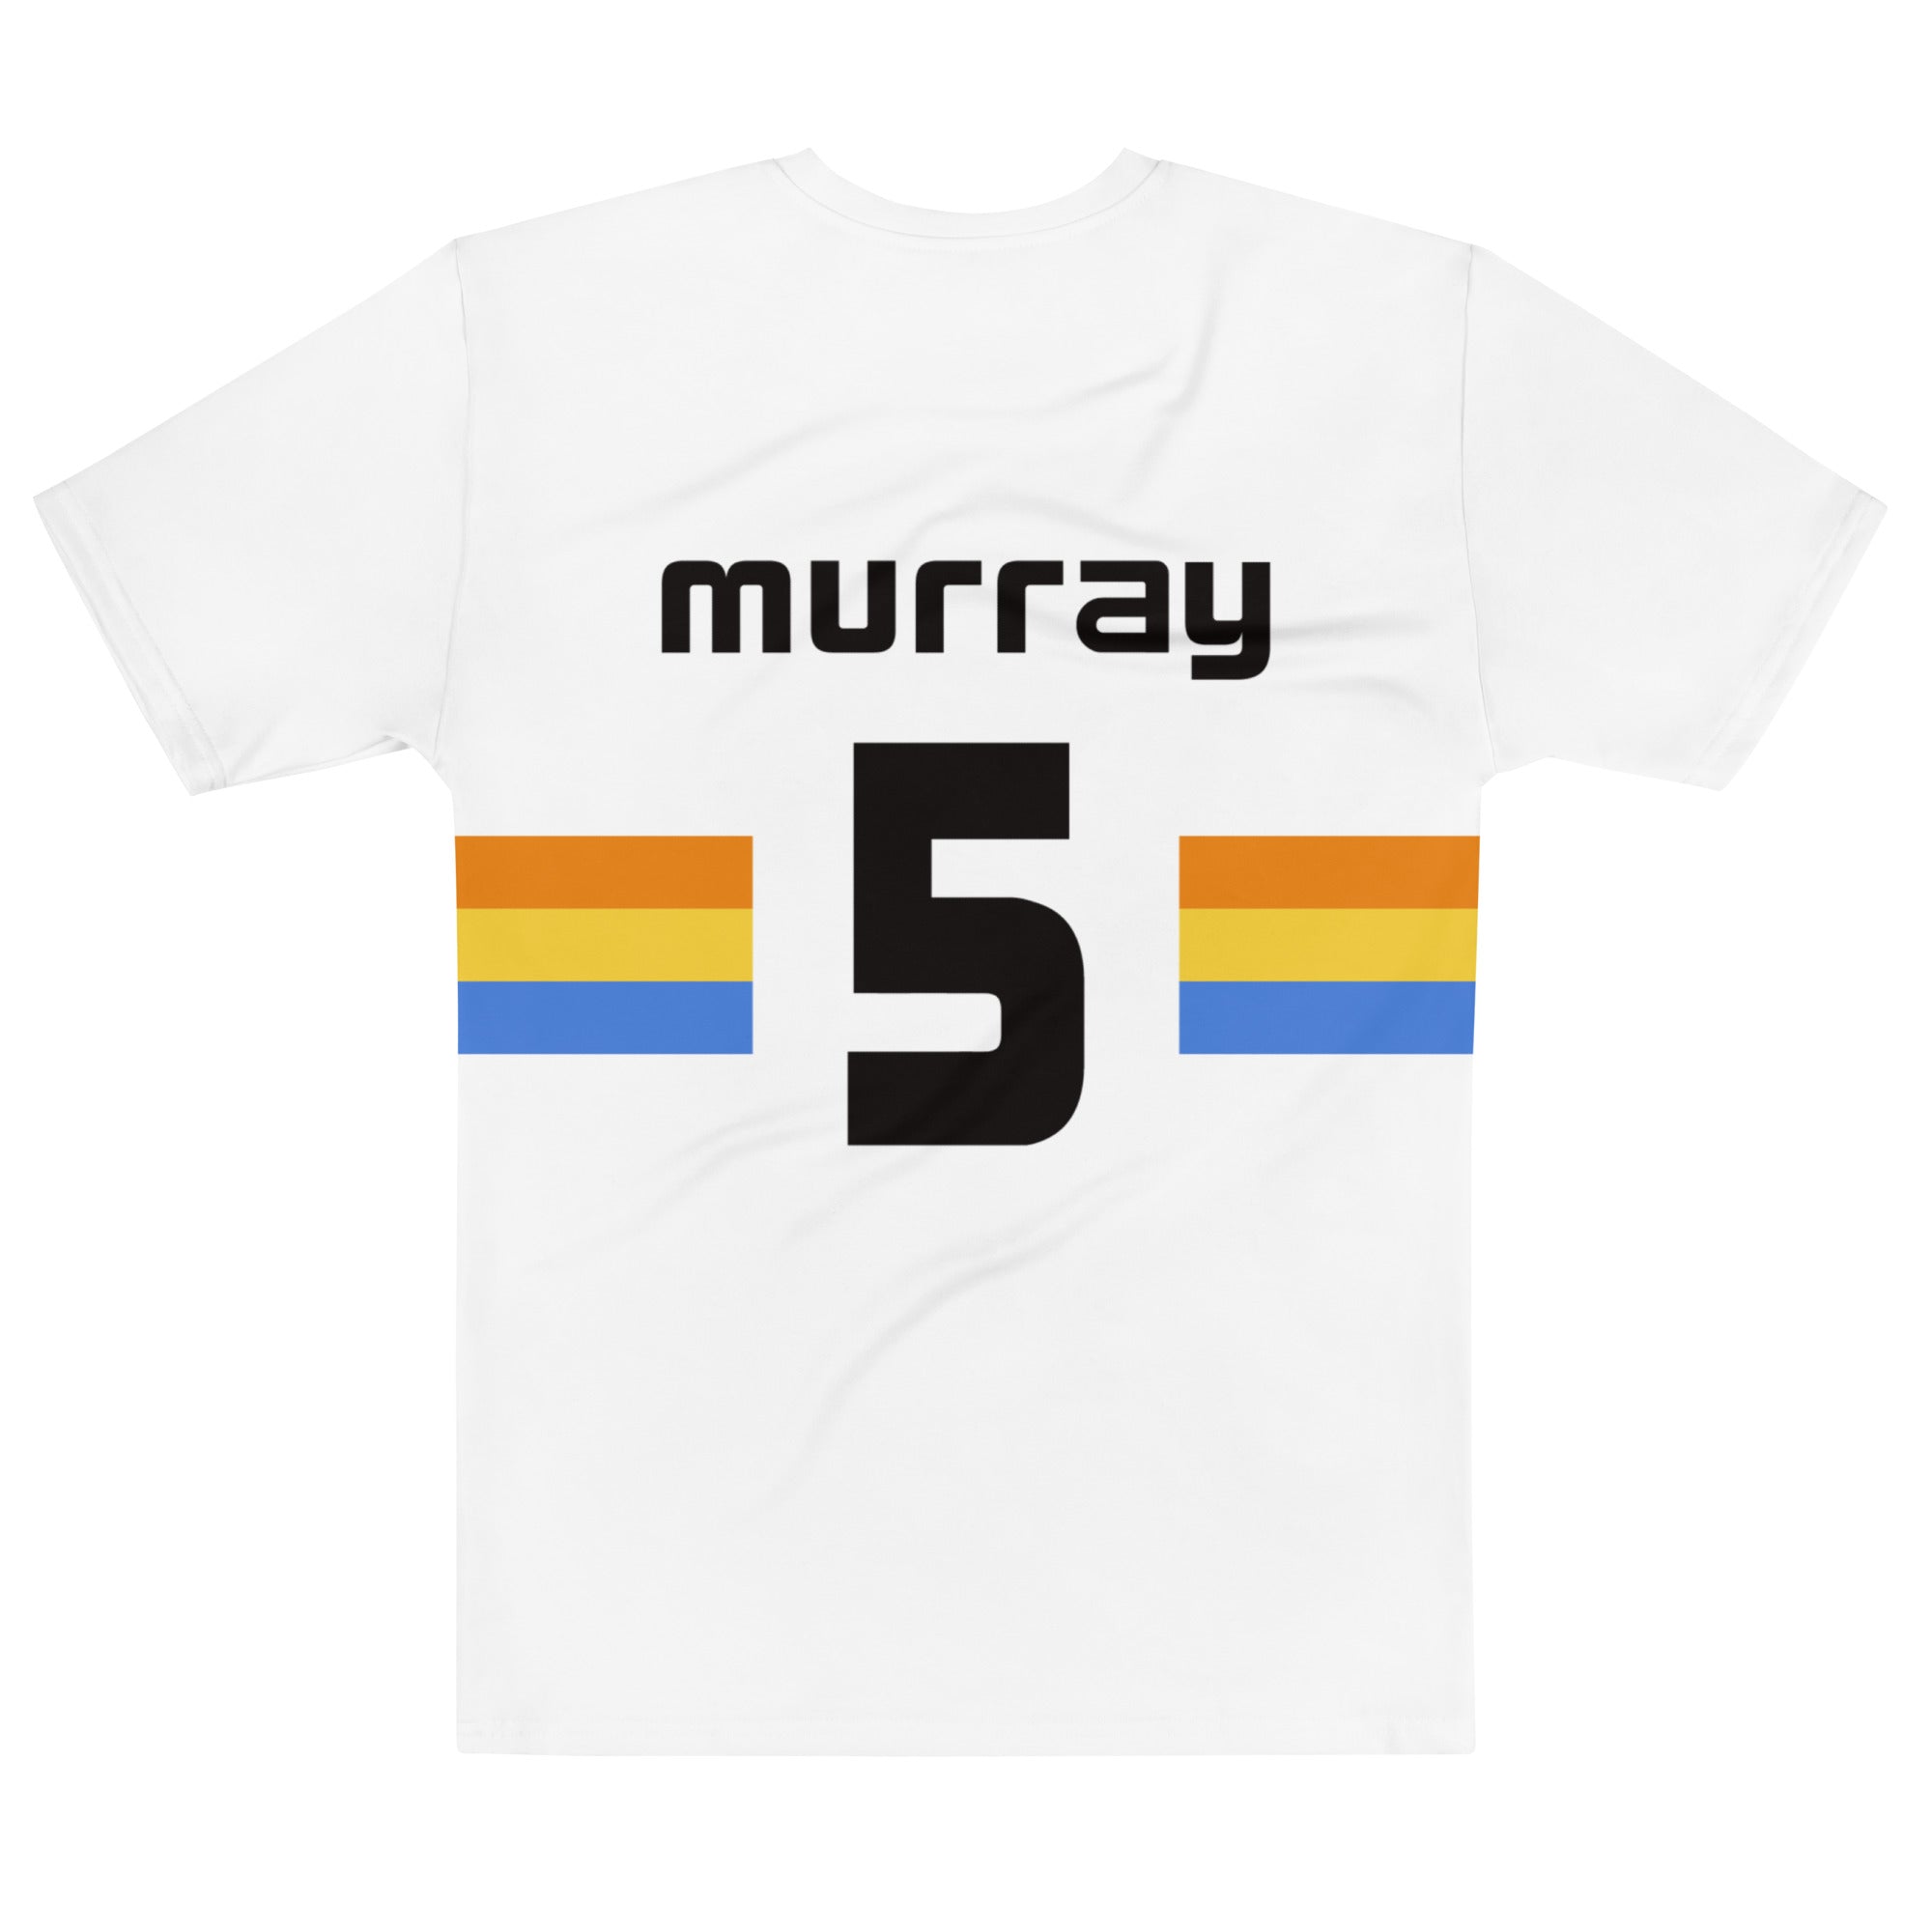 The Murray MARTA Shirsey